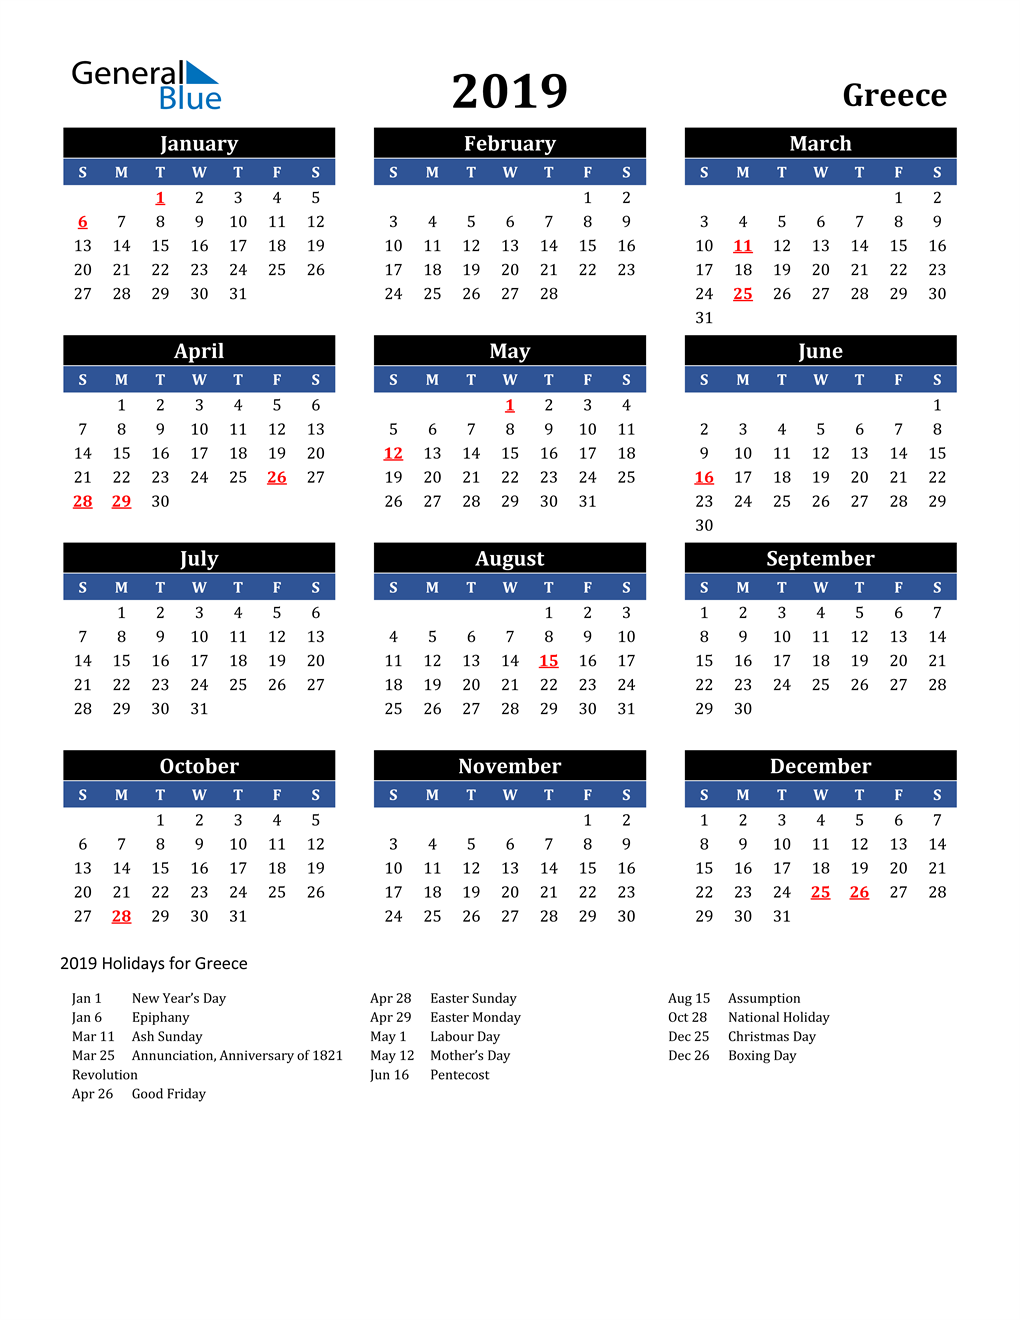 2019 Greece Calendar with Holidays